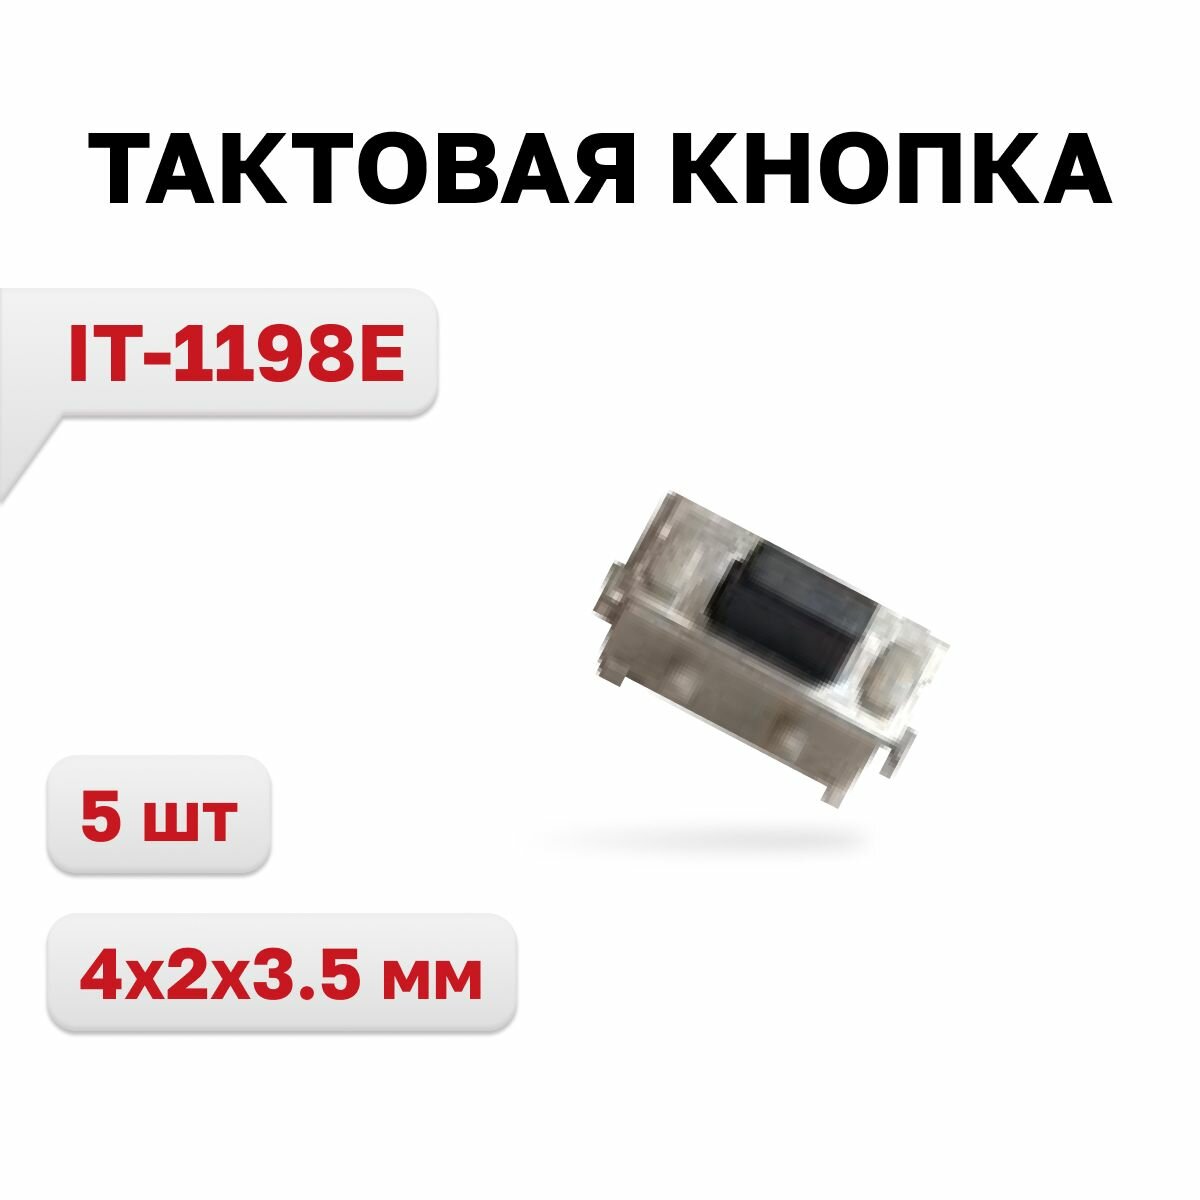 IT-1198E кнопка тактовая 4x2x3.5 мм 5 шт.